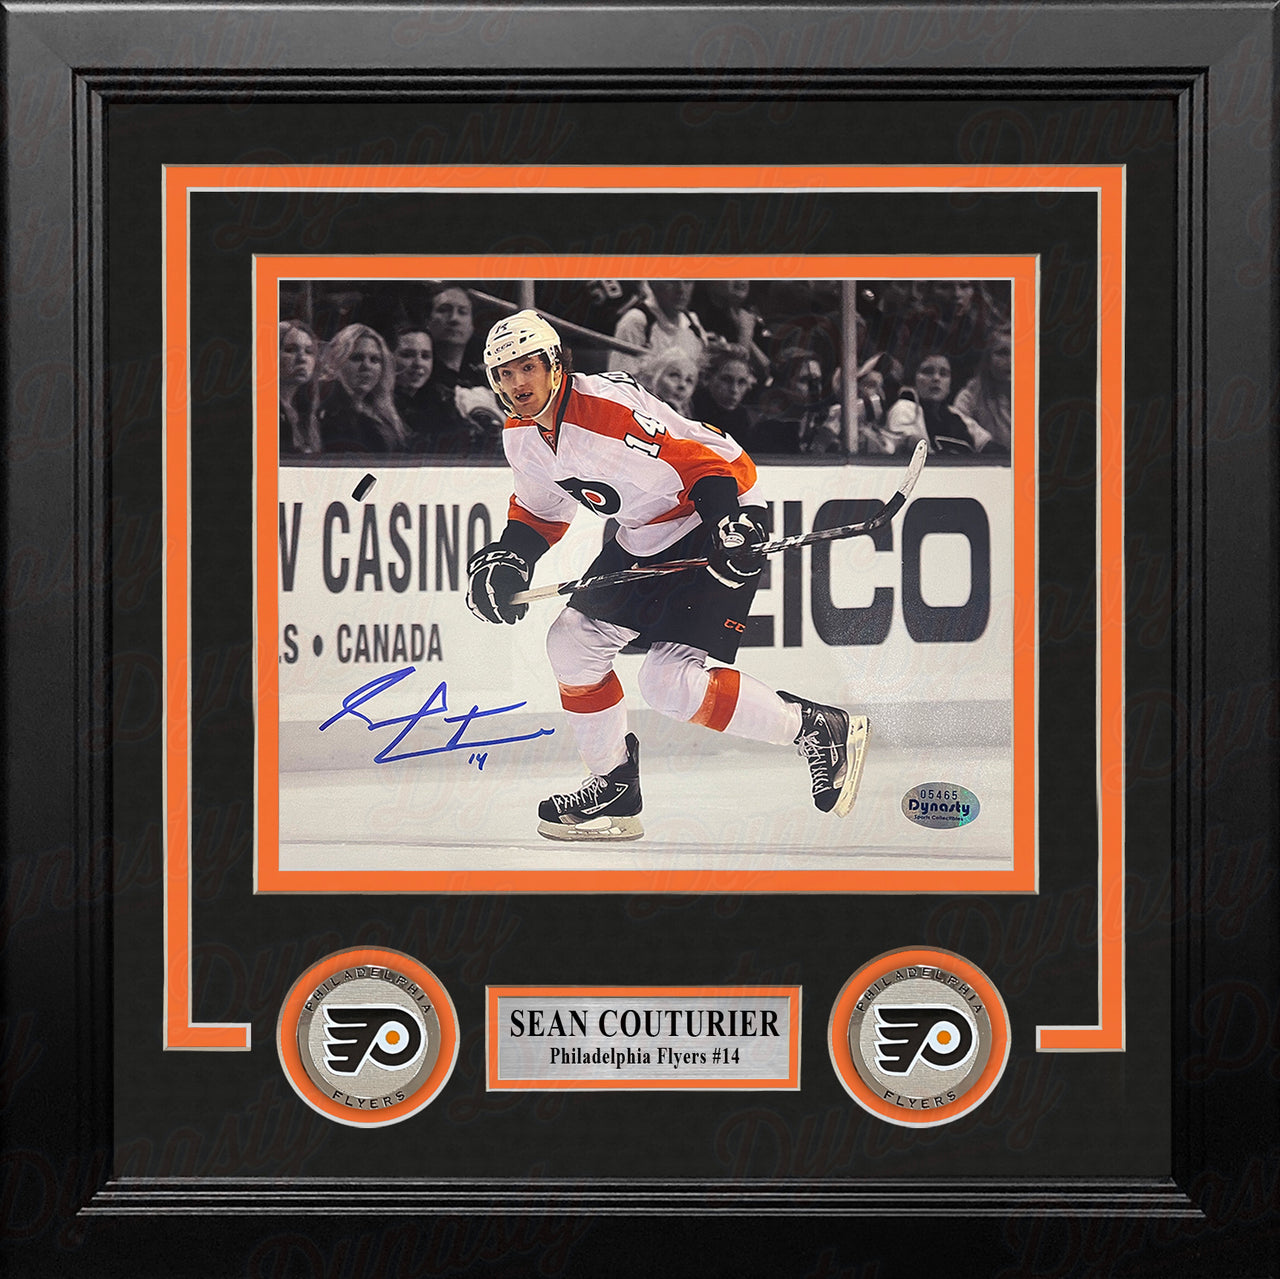 Sean Couturier Philadelphia Flyers Autographed 8" x 10" Framed Spotlight Hockey Photo